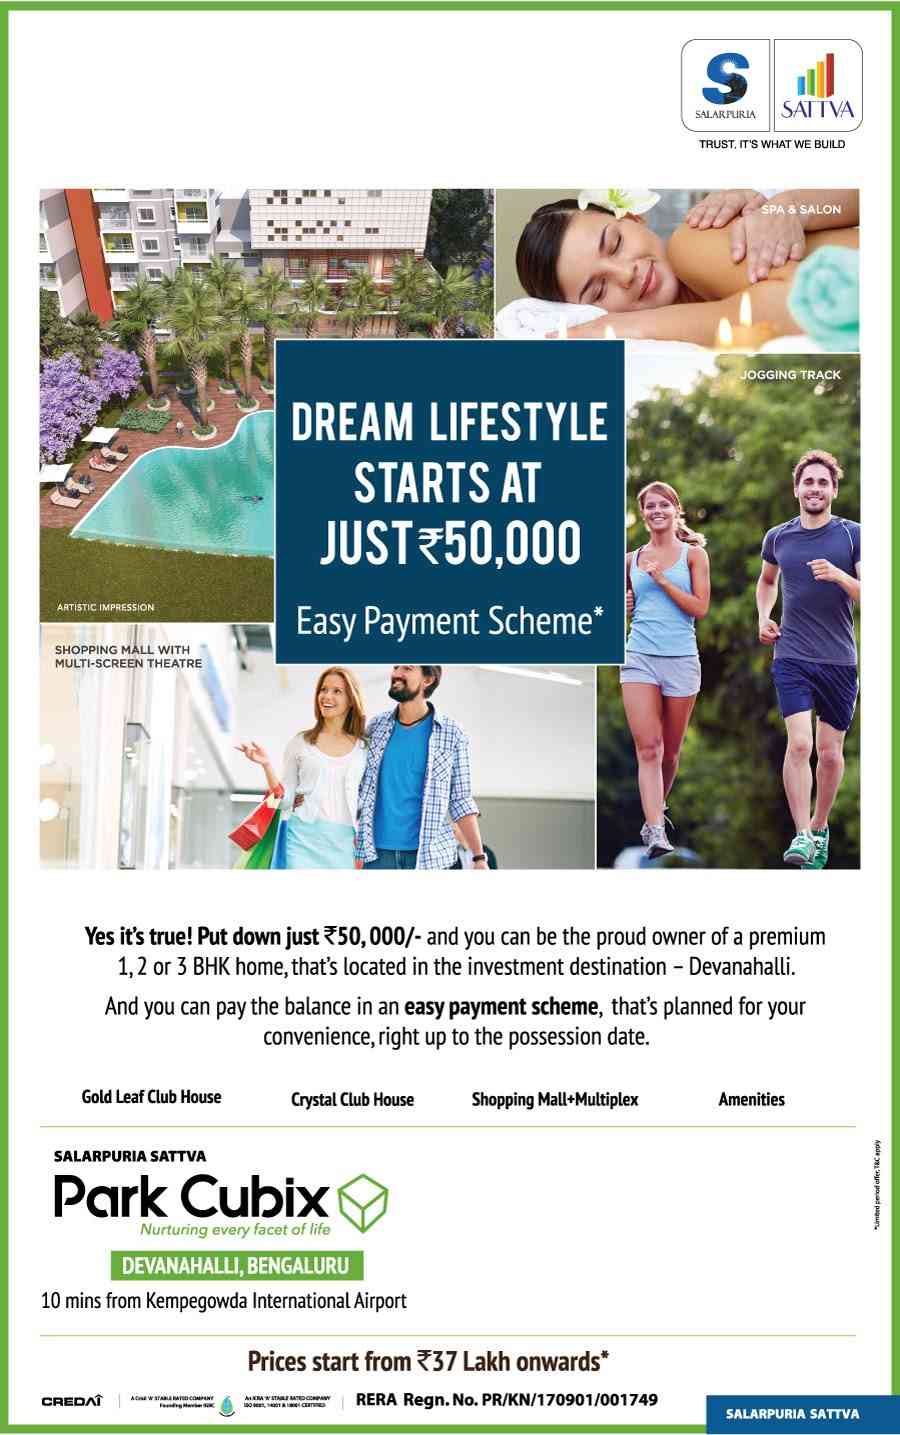 Dream lifestyle starts at just Rs 50000 at Salarpuria Sattva Park Cubix in Devanahalli, Bangalore